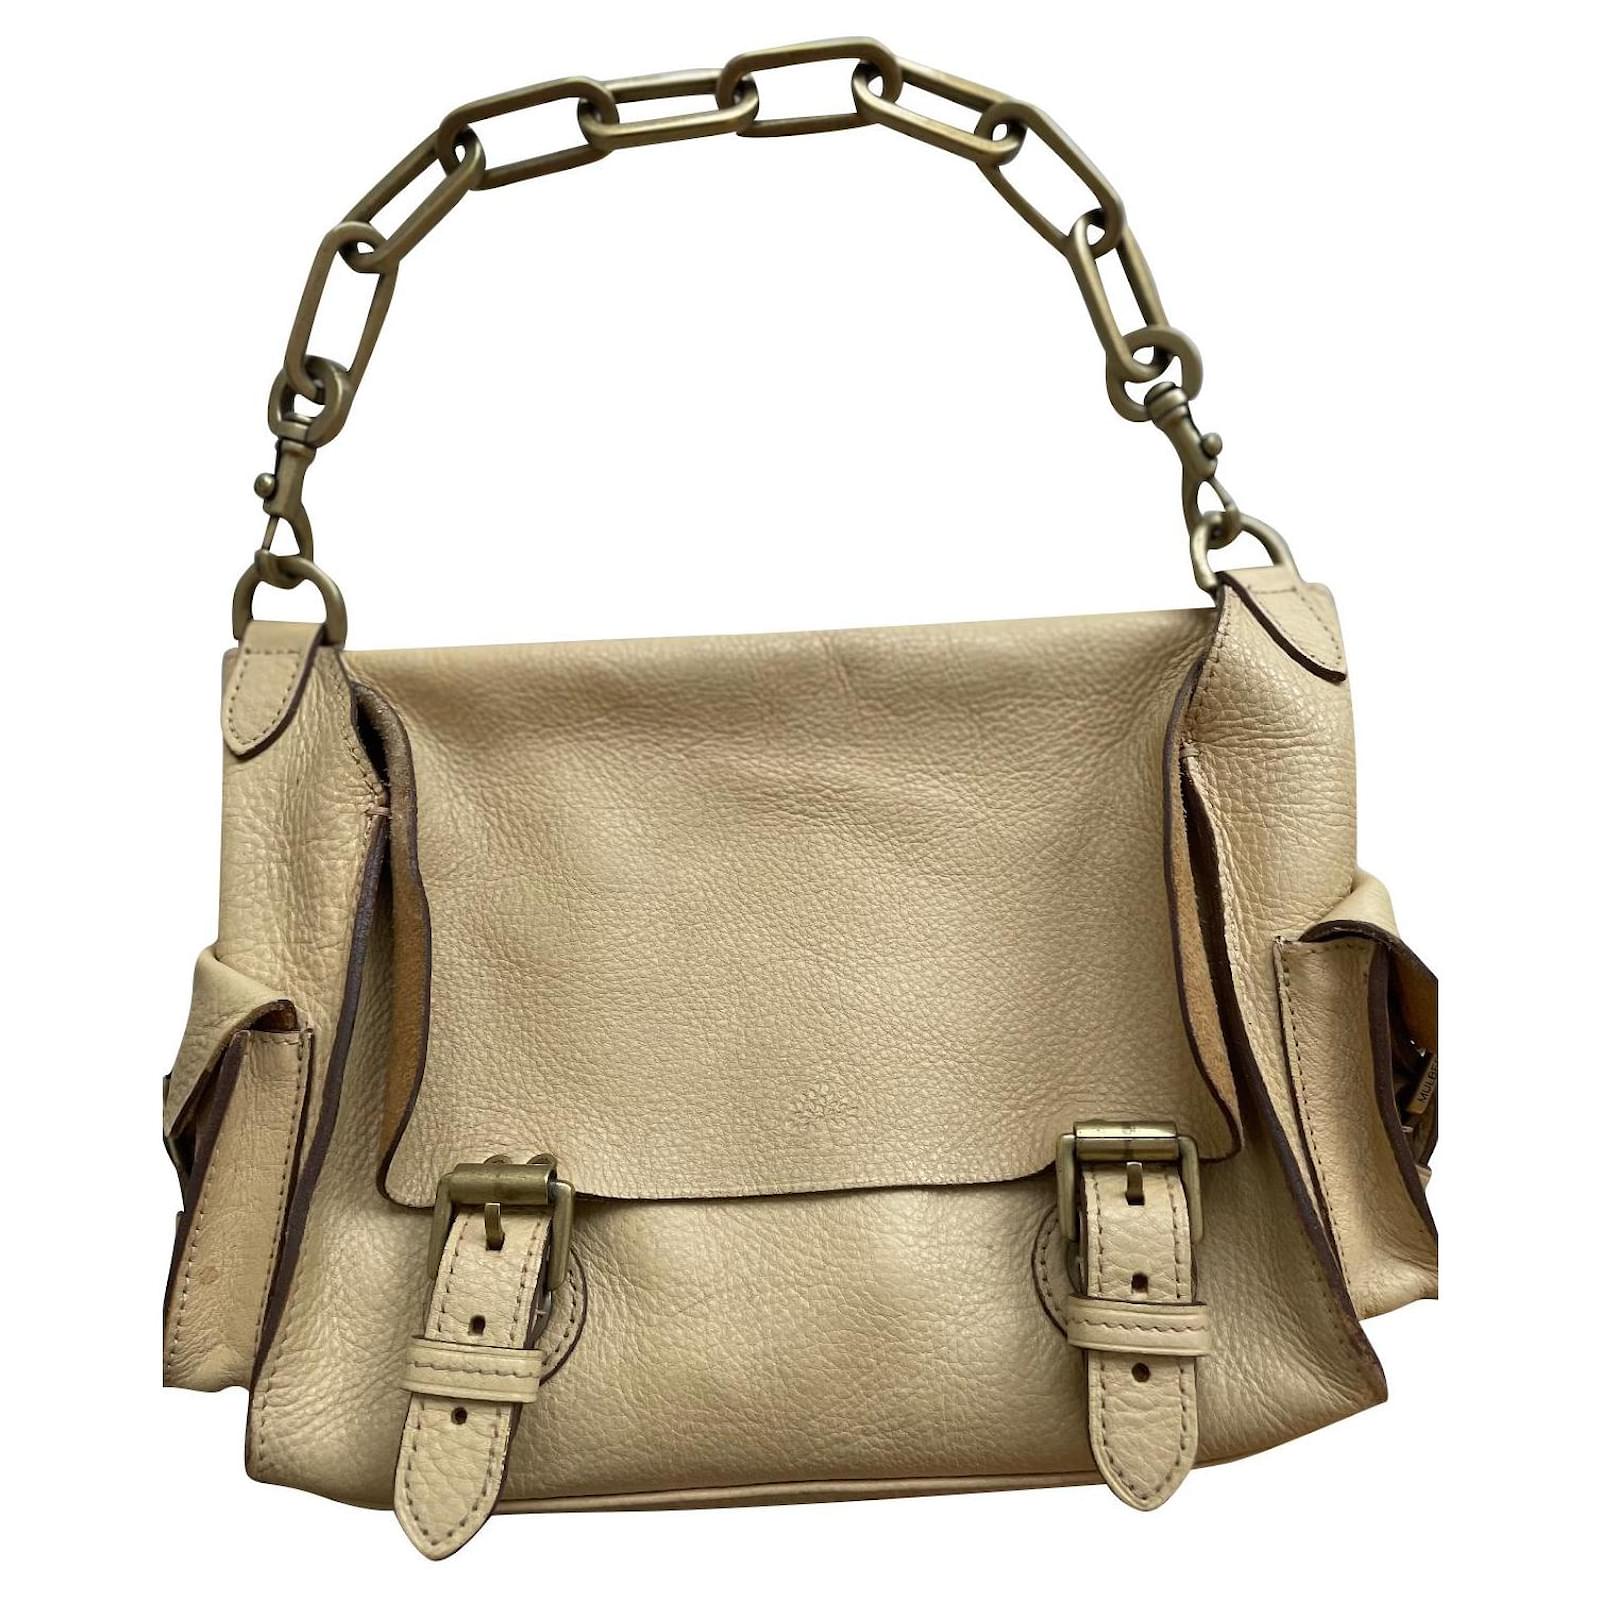 Ginger Darwin Annie | Mulberry handbags, Fashion handbags, Handbag